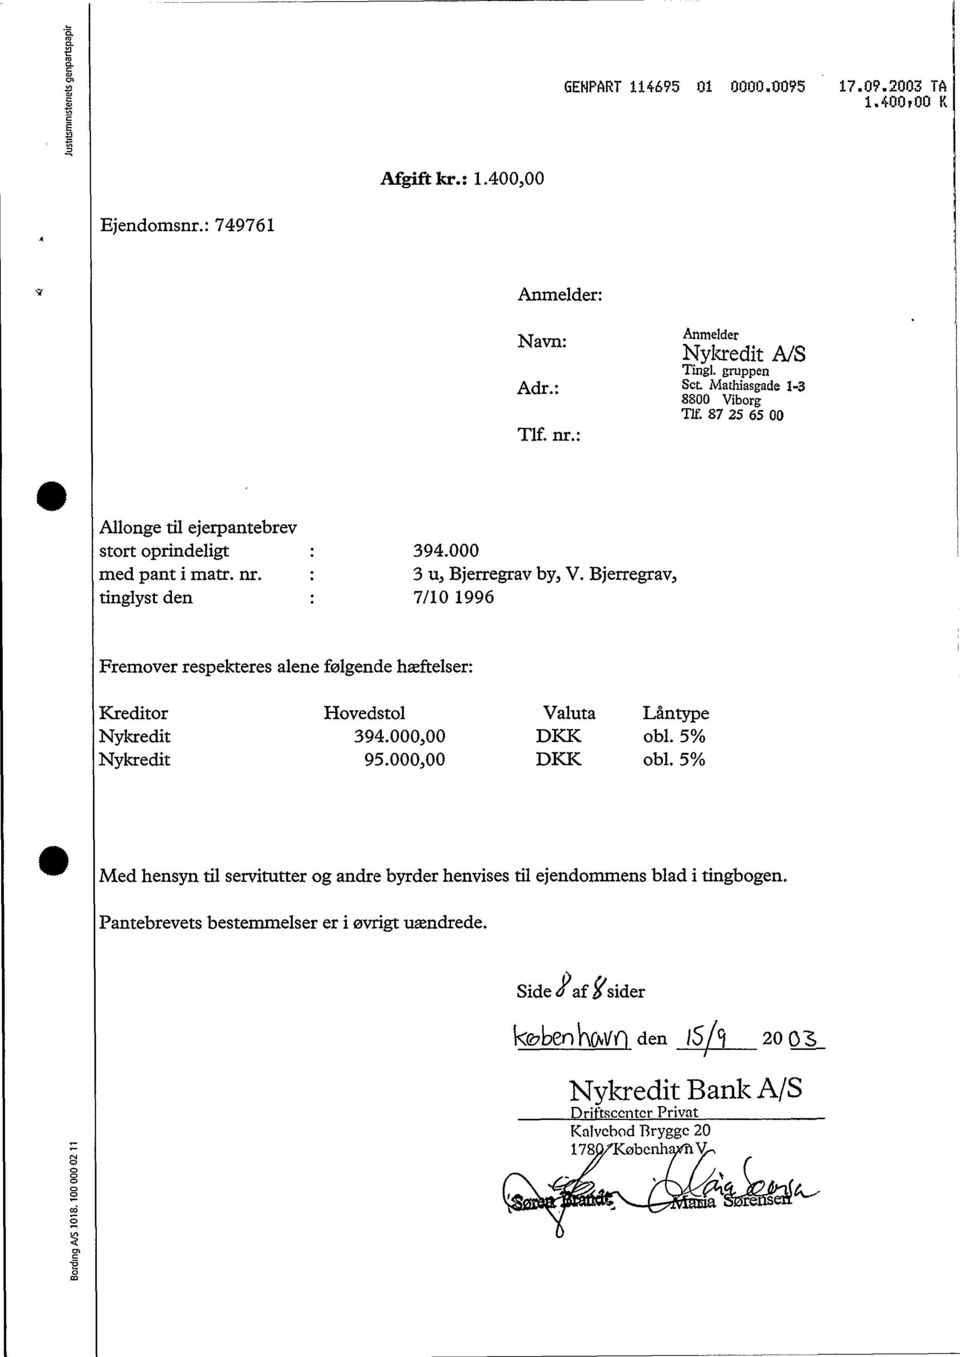 Bjerregrav, 7/10 1996 Fremover respekteres alene følgende hæftelser: Kreditor Hovedstol Valuta Låntype Nykredit 394.000,00 DKK obl.